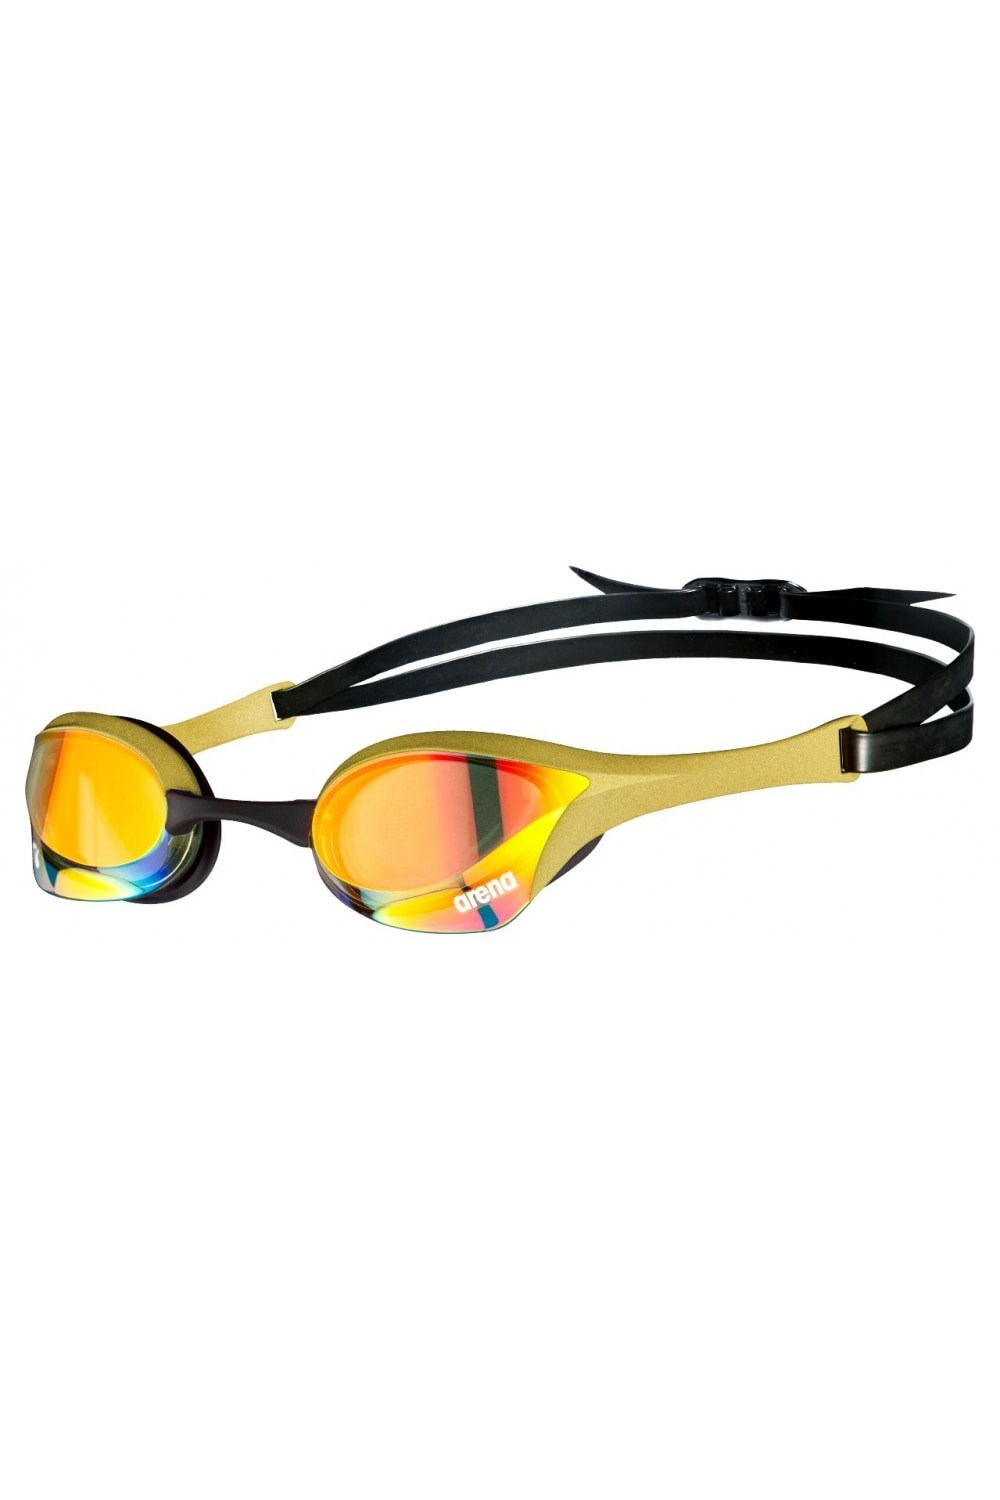 Cobra Mirror Ultra Swipe Swimming Goggles -